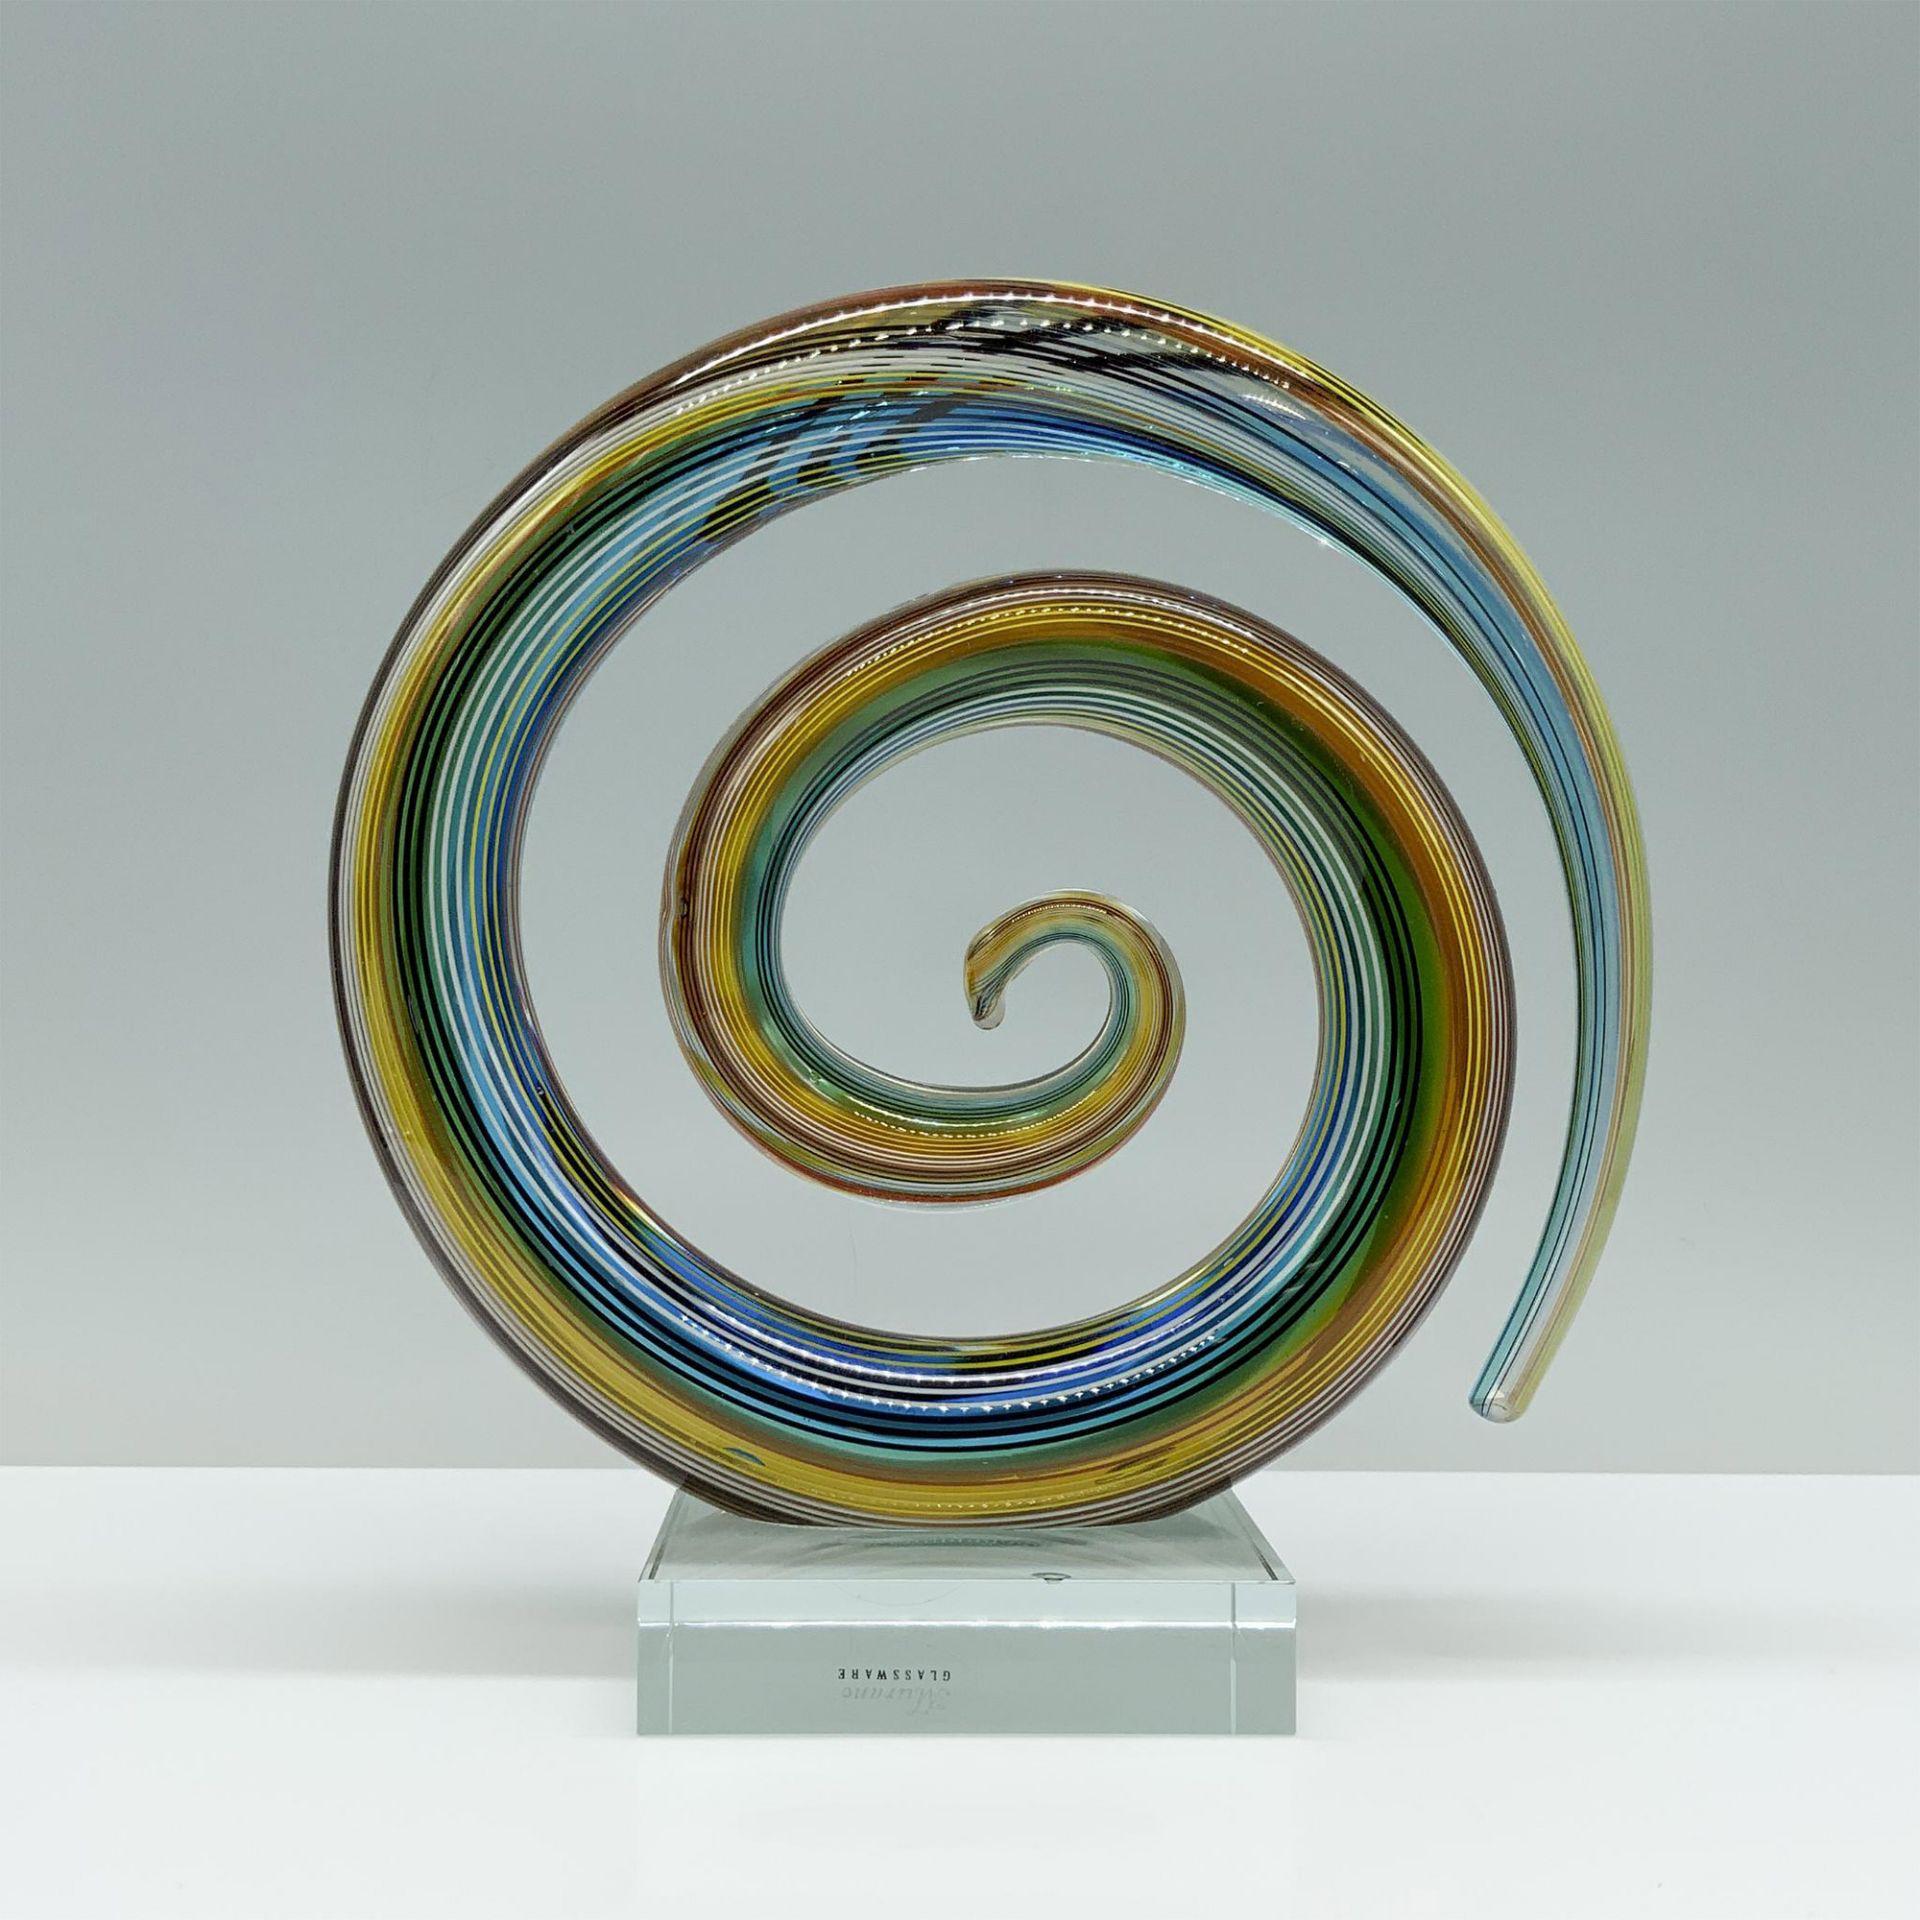 Murano Glassware Art Spiral Sculpture - Image 2 of 3